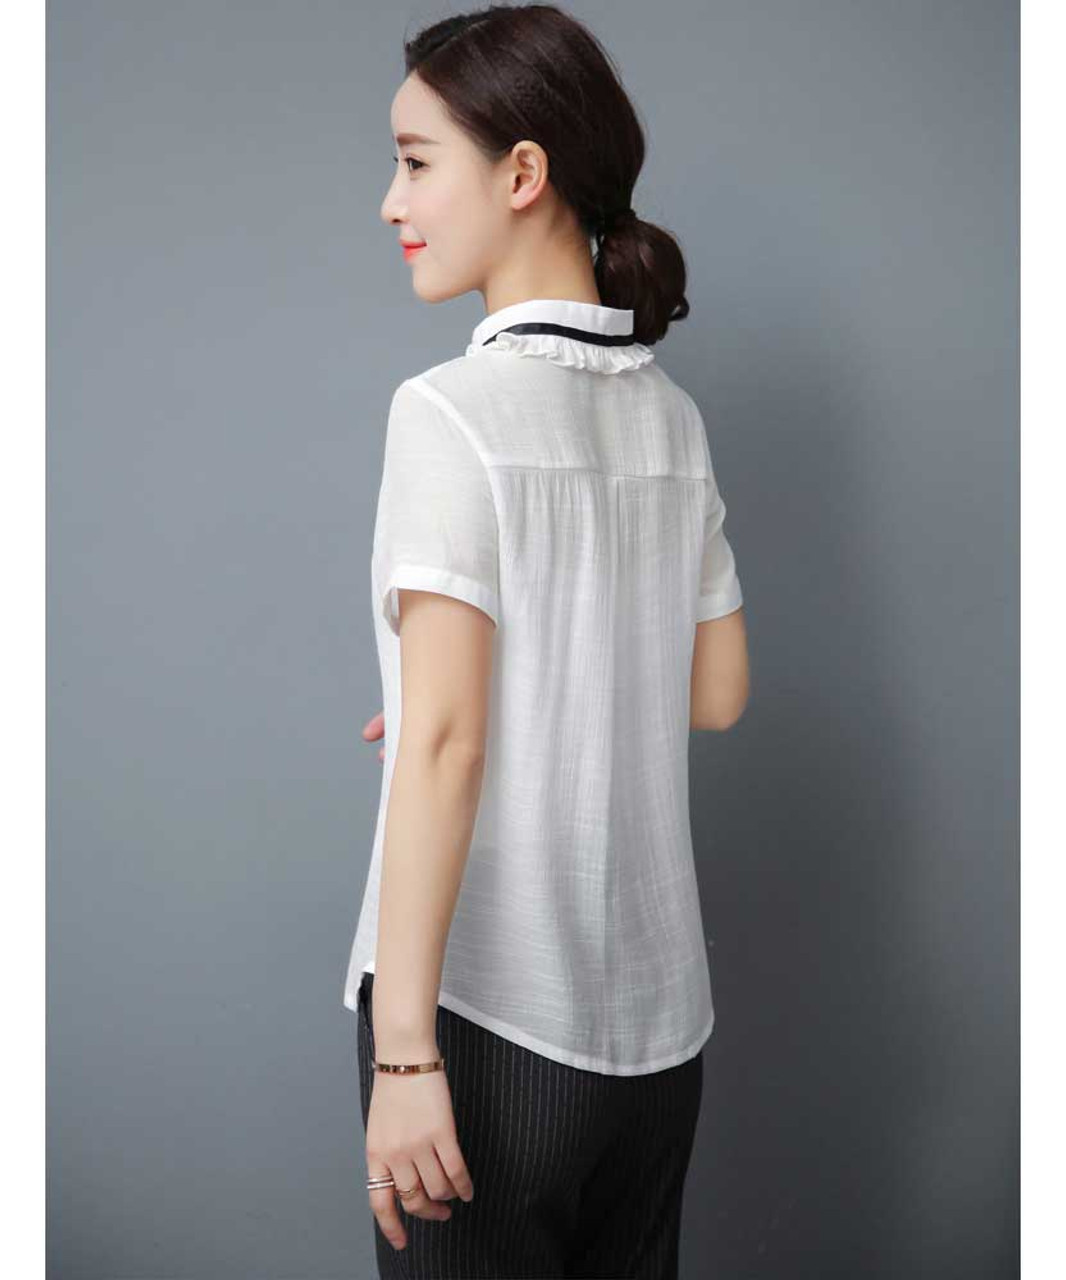 White ruffle style short sleeve shirt with neck tie | Womens shirts ...